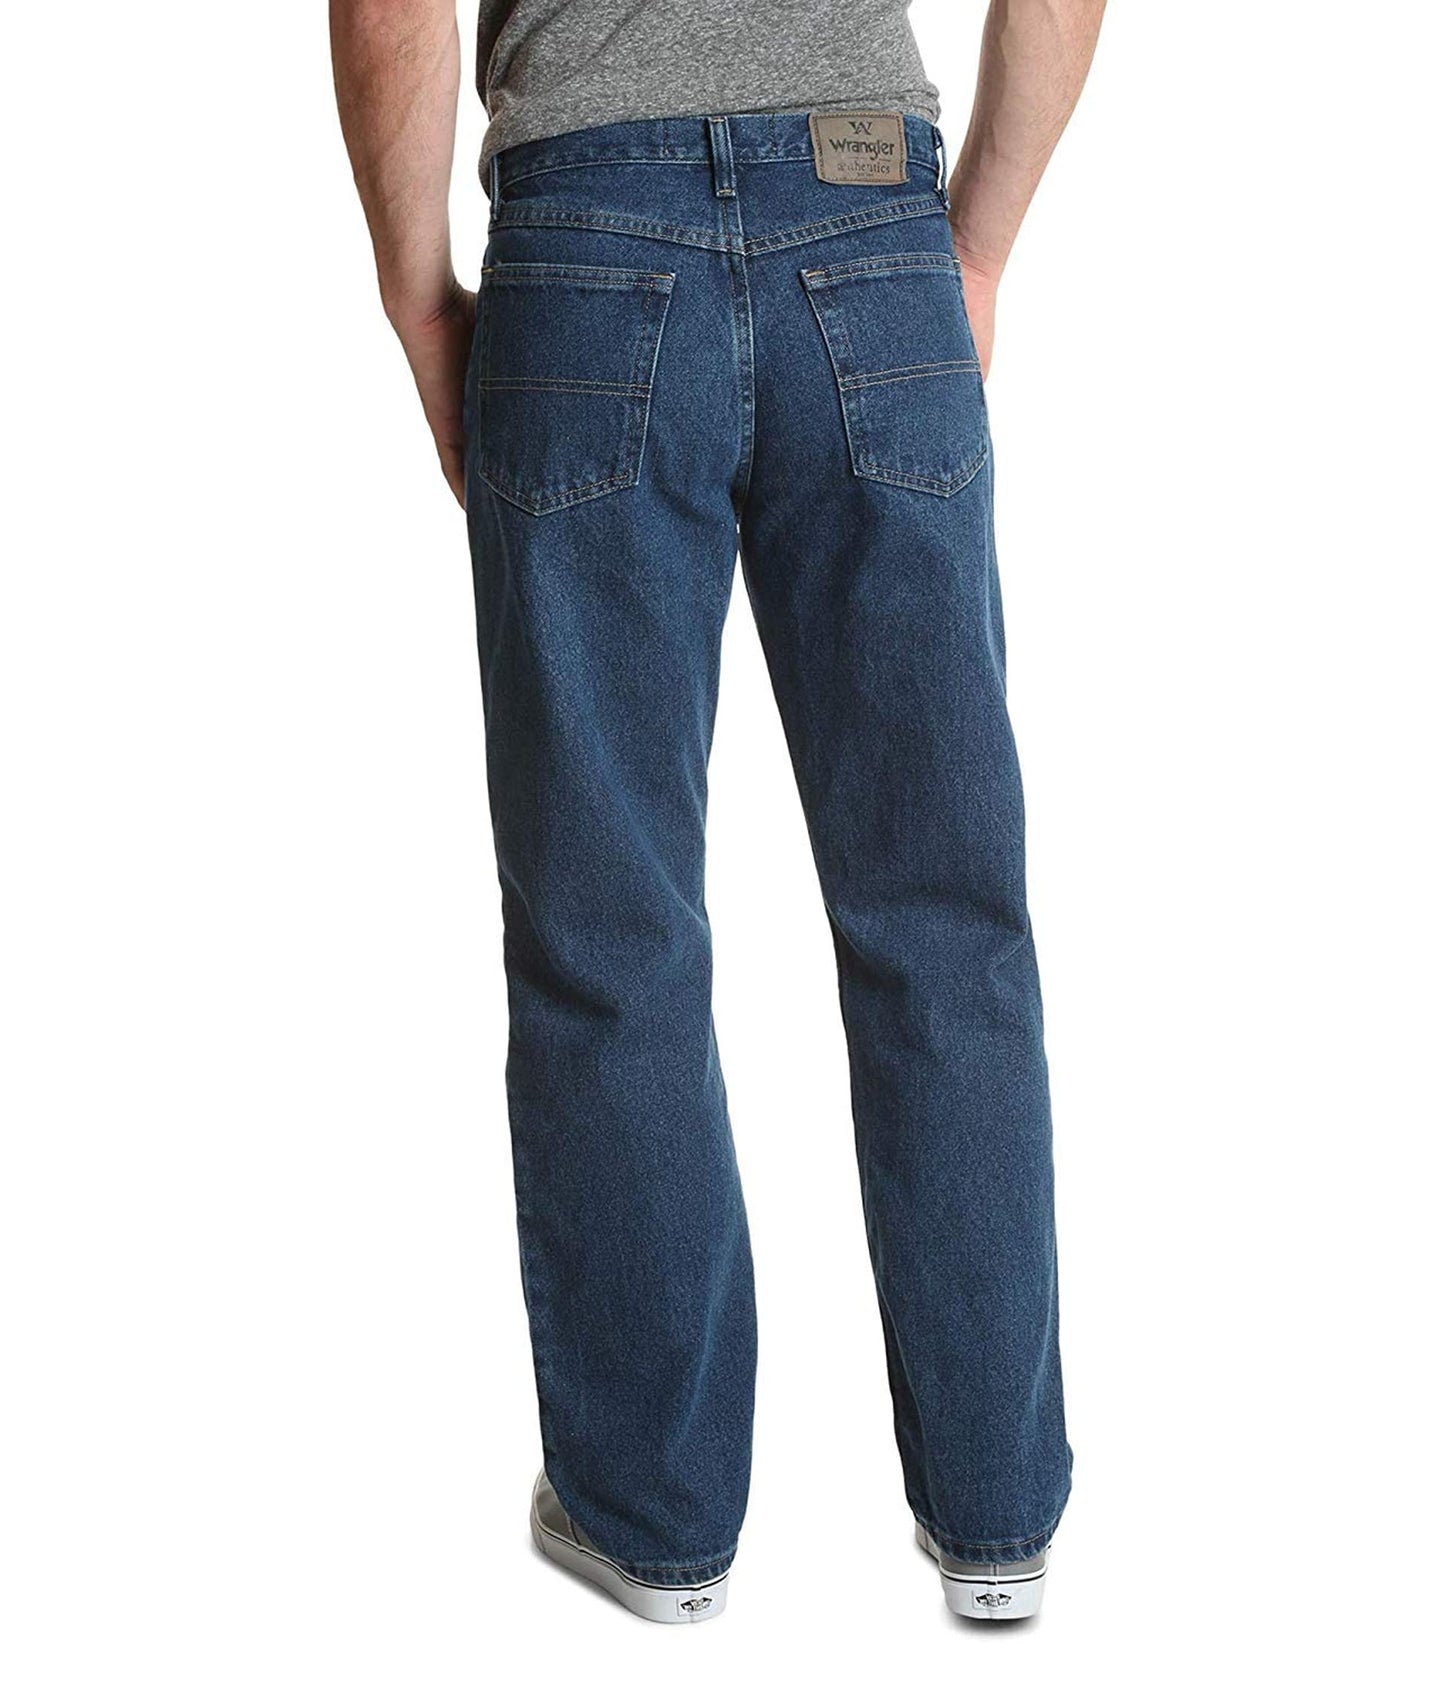 Wrangler Authentics Men's Big & Tall Classic 5-Pocket Relaxed Fit Cotton Jean, Dark Stonewash, 44W x 30L